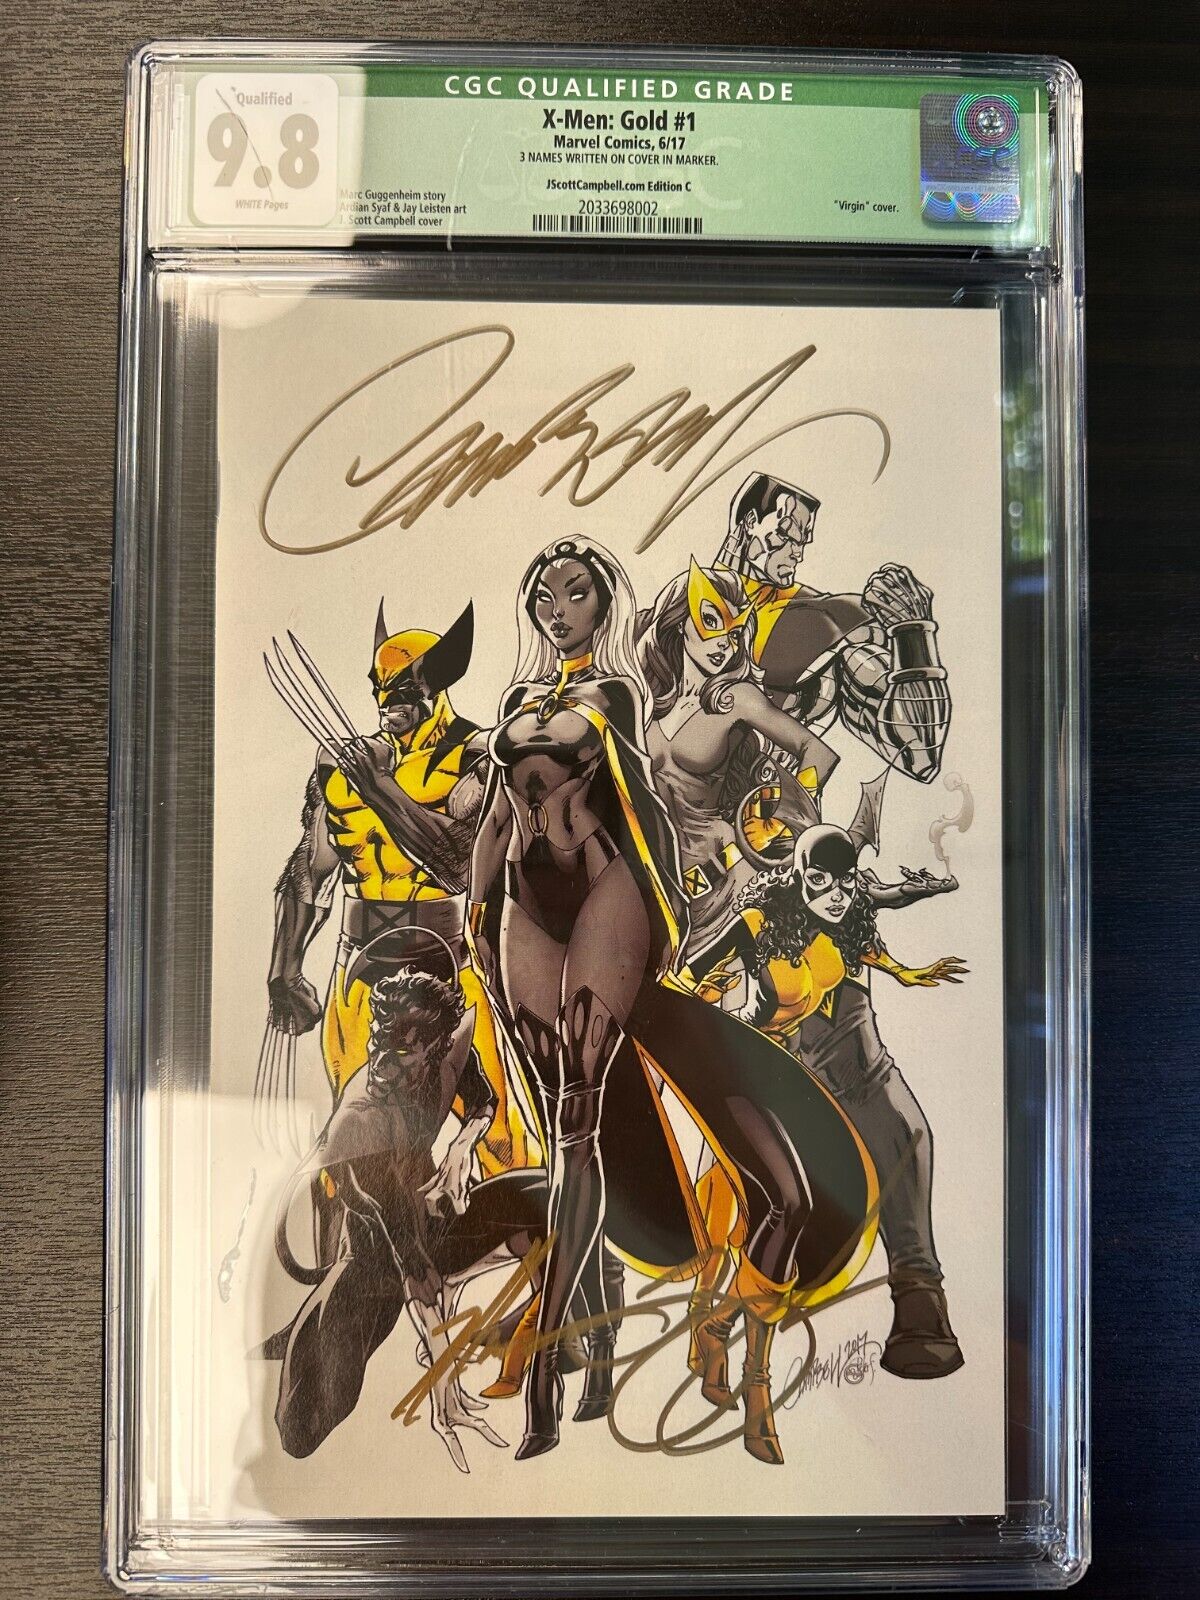 CGC 9.8 X-Men: Gold #1 Variant signed by J. Scott Campbell & Marc Guggenheim